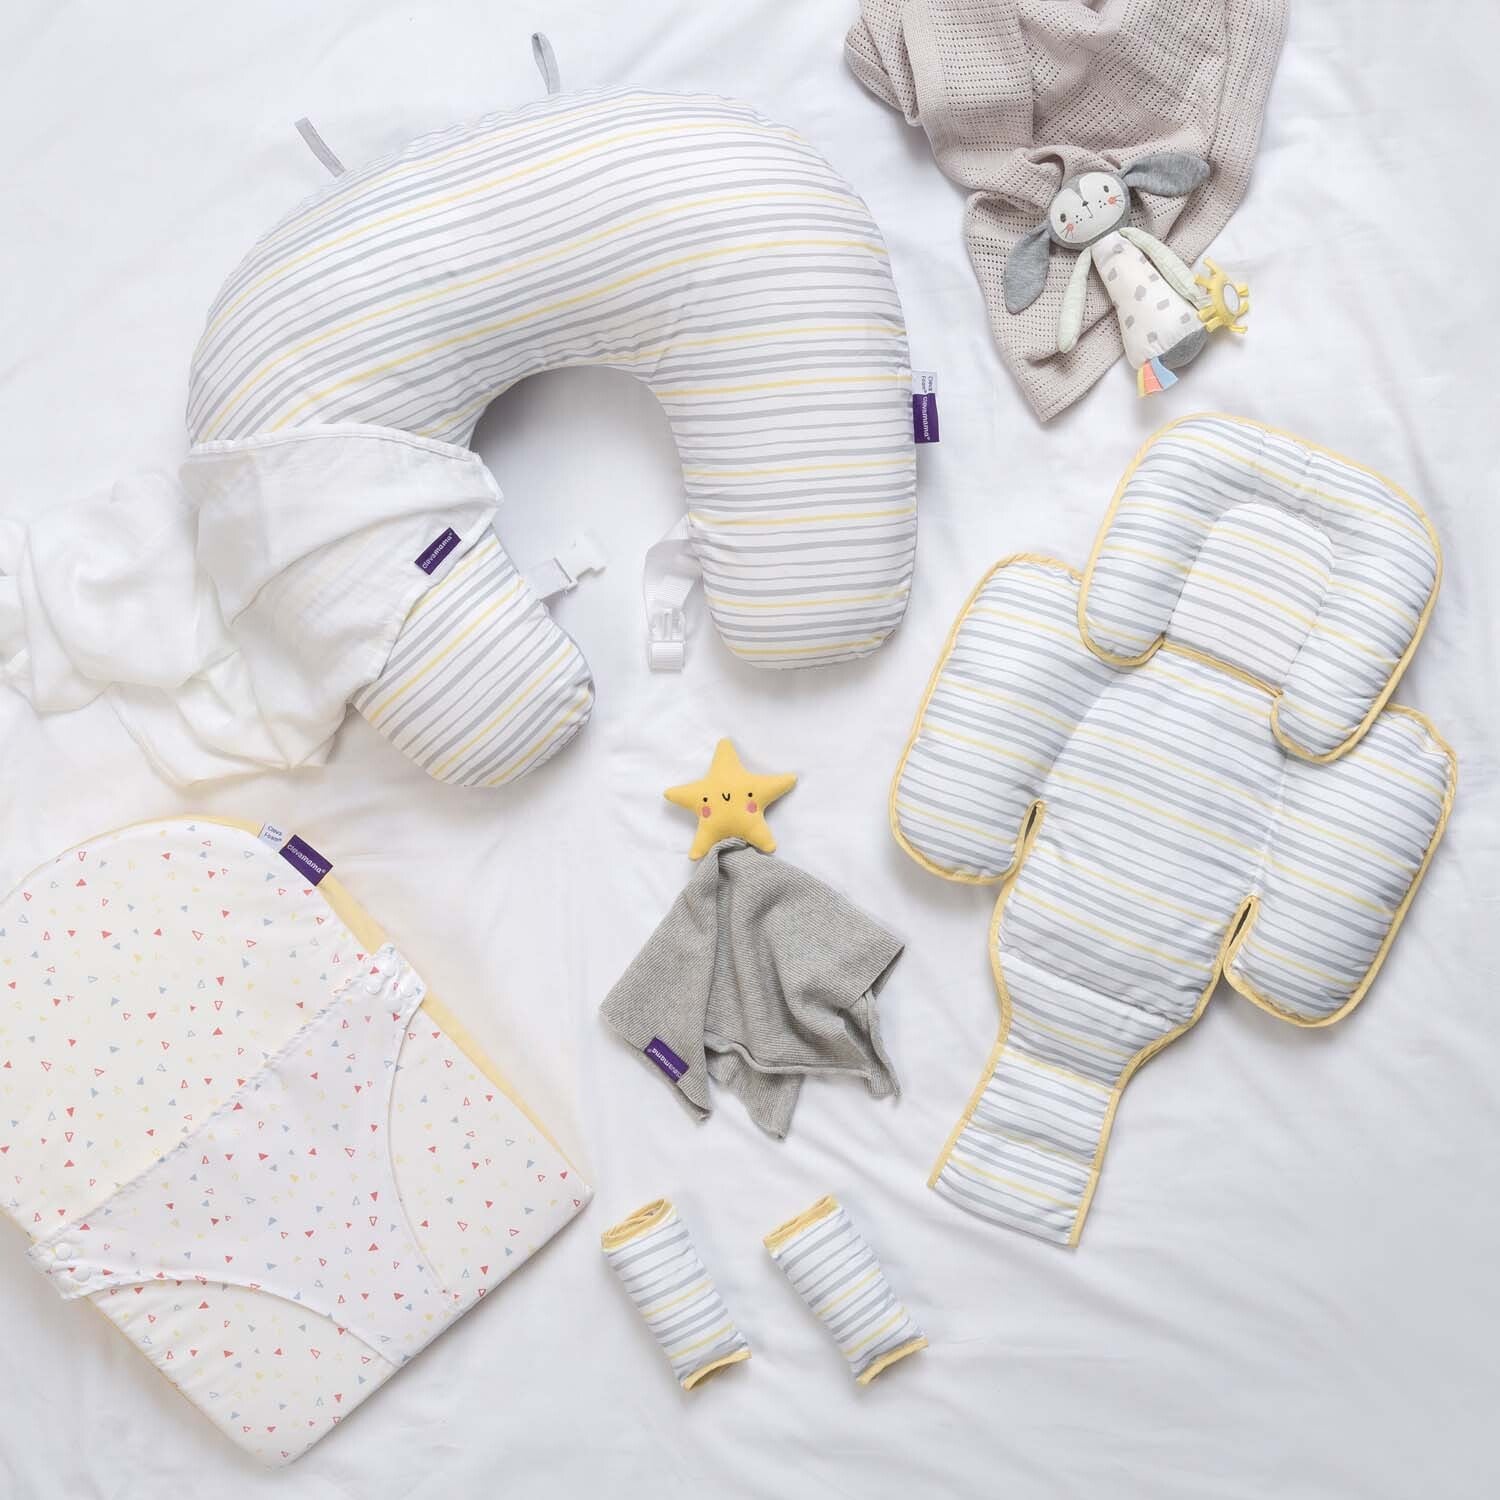 ClevaMama Nursing Pillow & Baby Nest